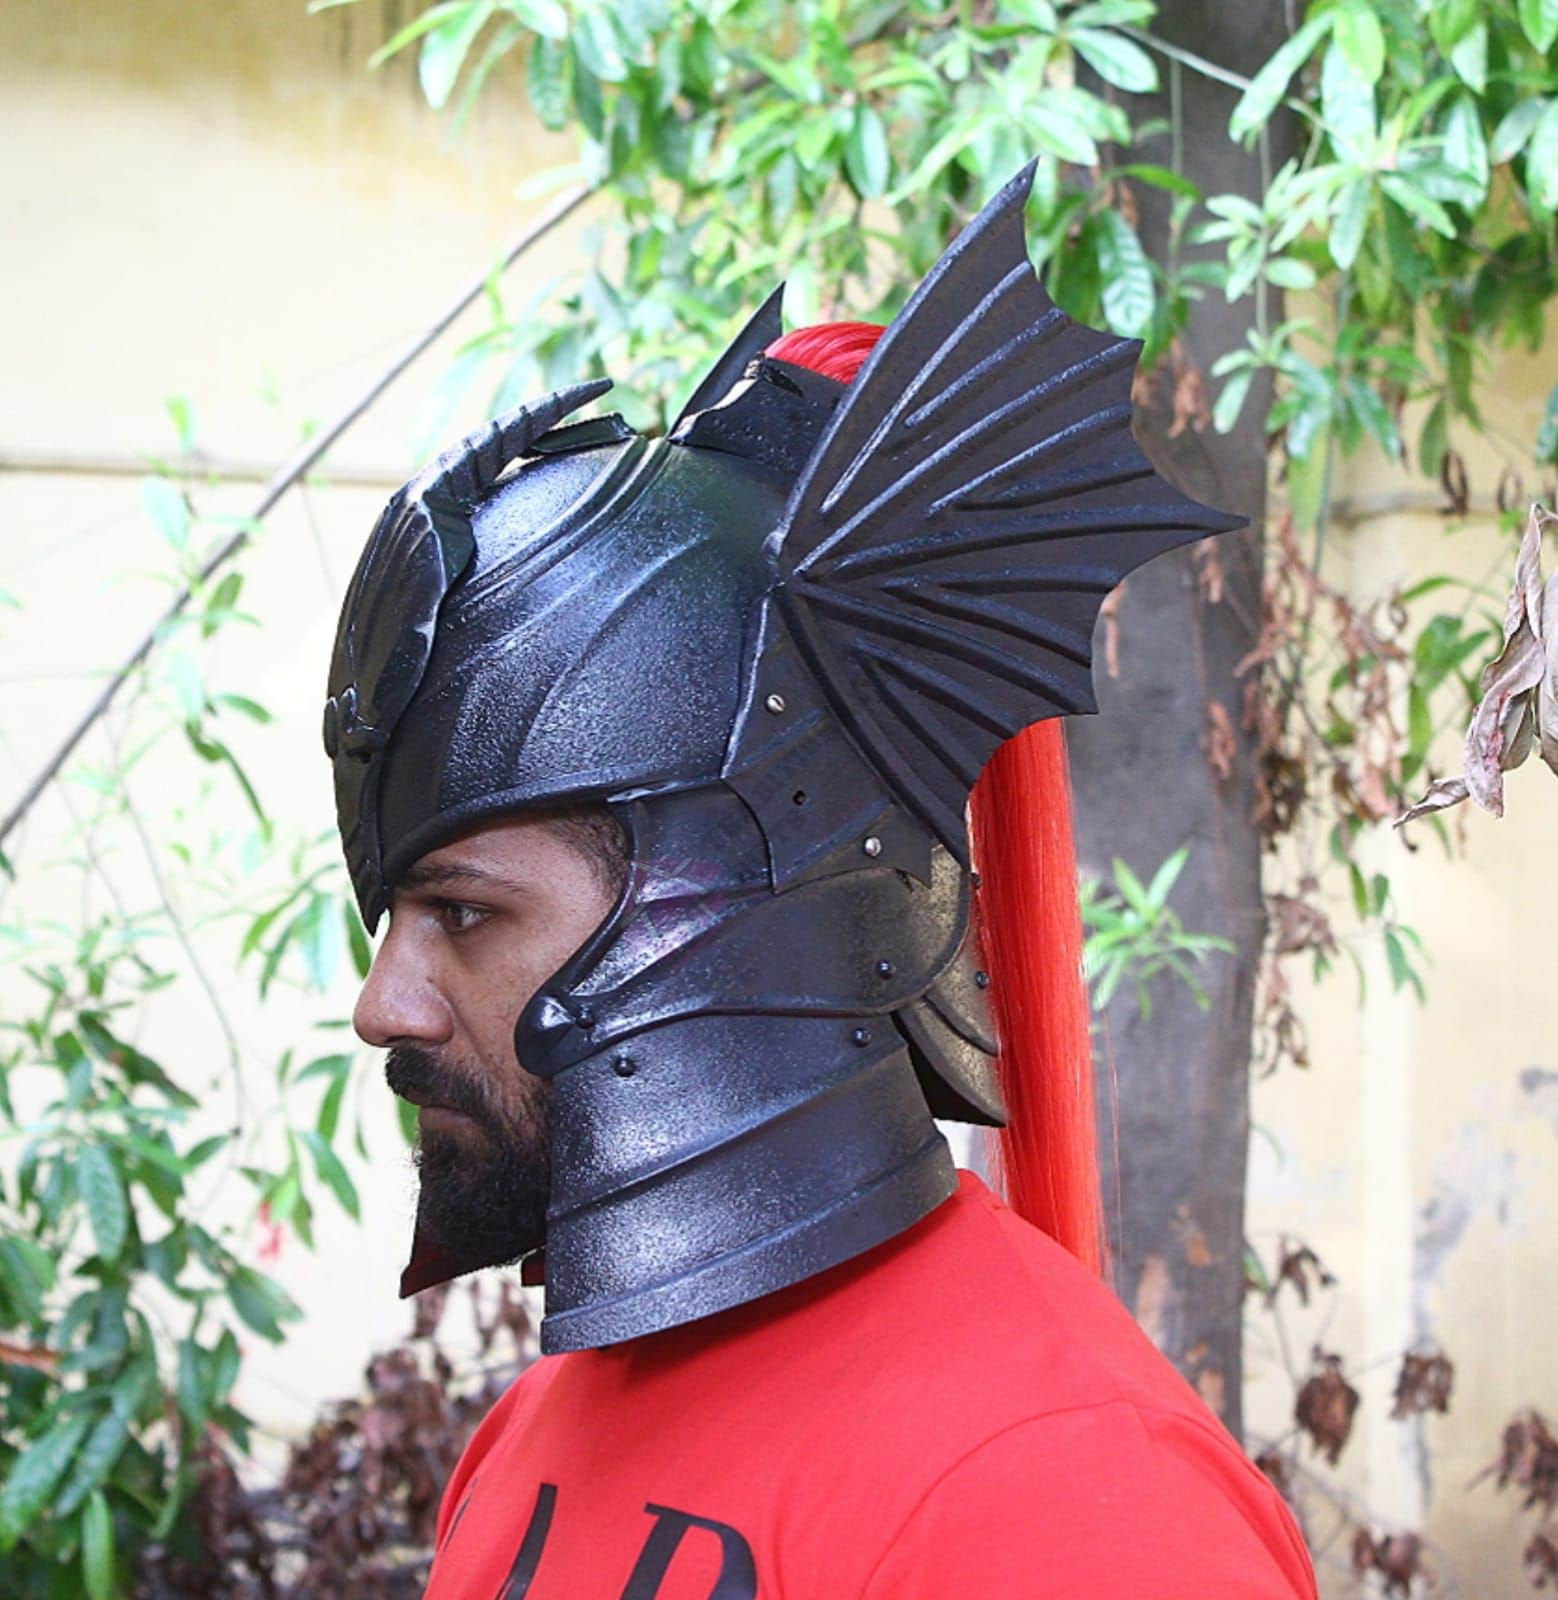 Middeleeuwse Steel Larp Warrior Kingsguard Half Body Armor Suit Knight Full Suit Accessoires Hoeden & petten Helmen Militaire helmen 